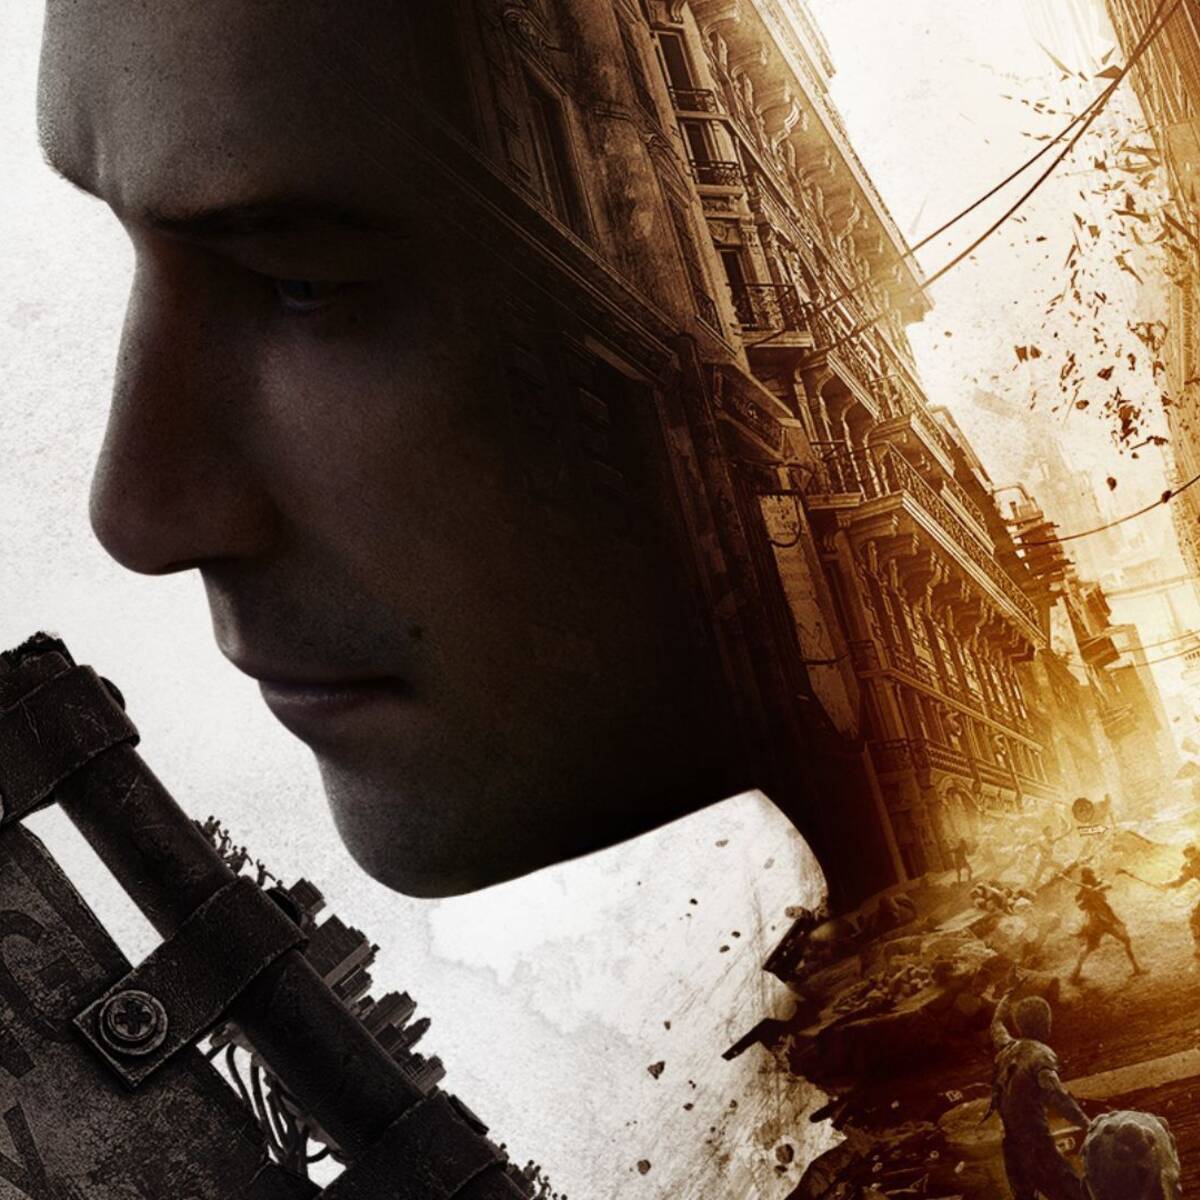 Dying Light 2 tendrá parches en PC, PS5 y Xbox Series X, S la próxima semana